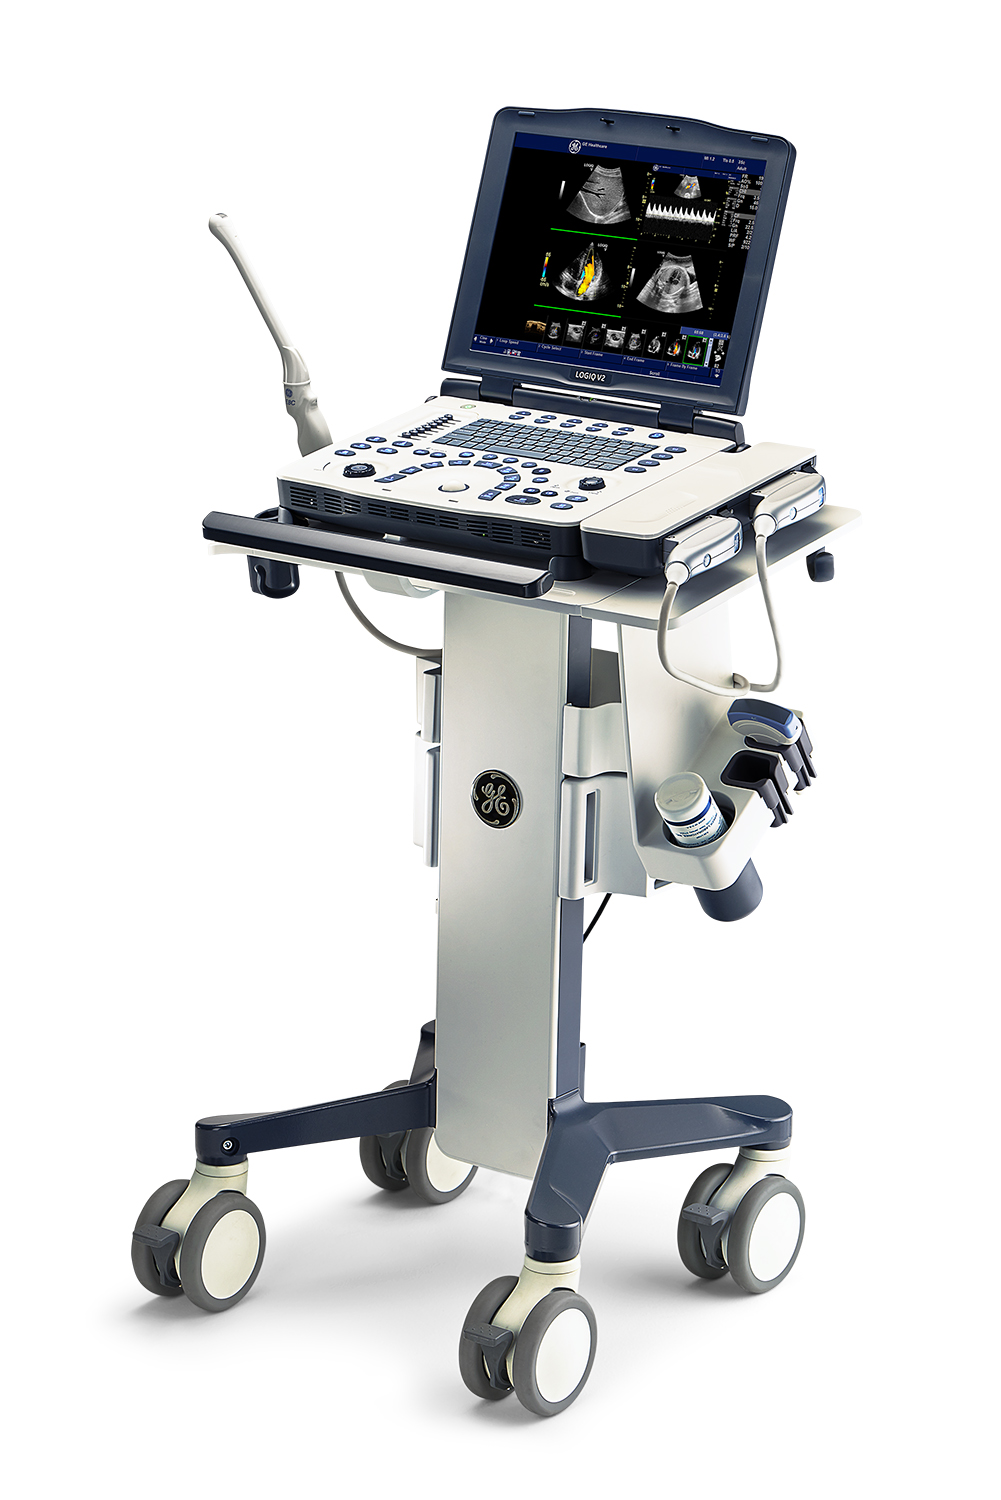 ge ultrasound machine price in india